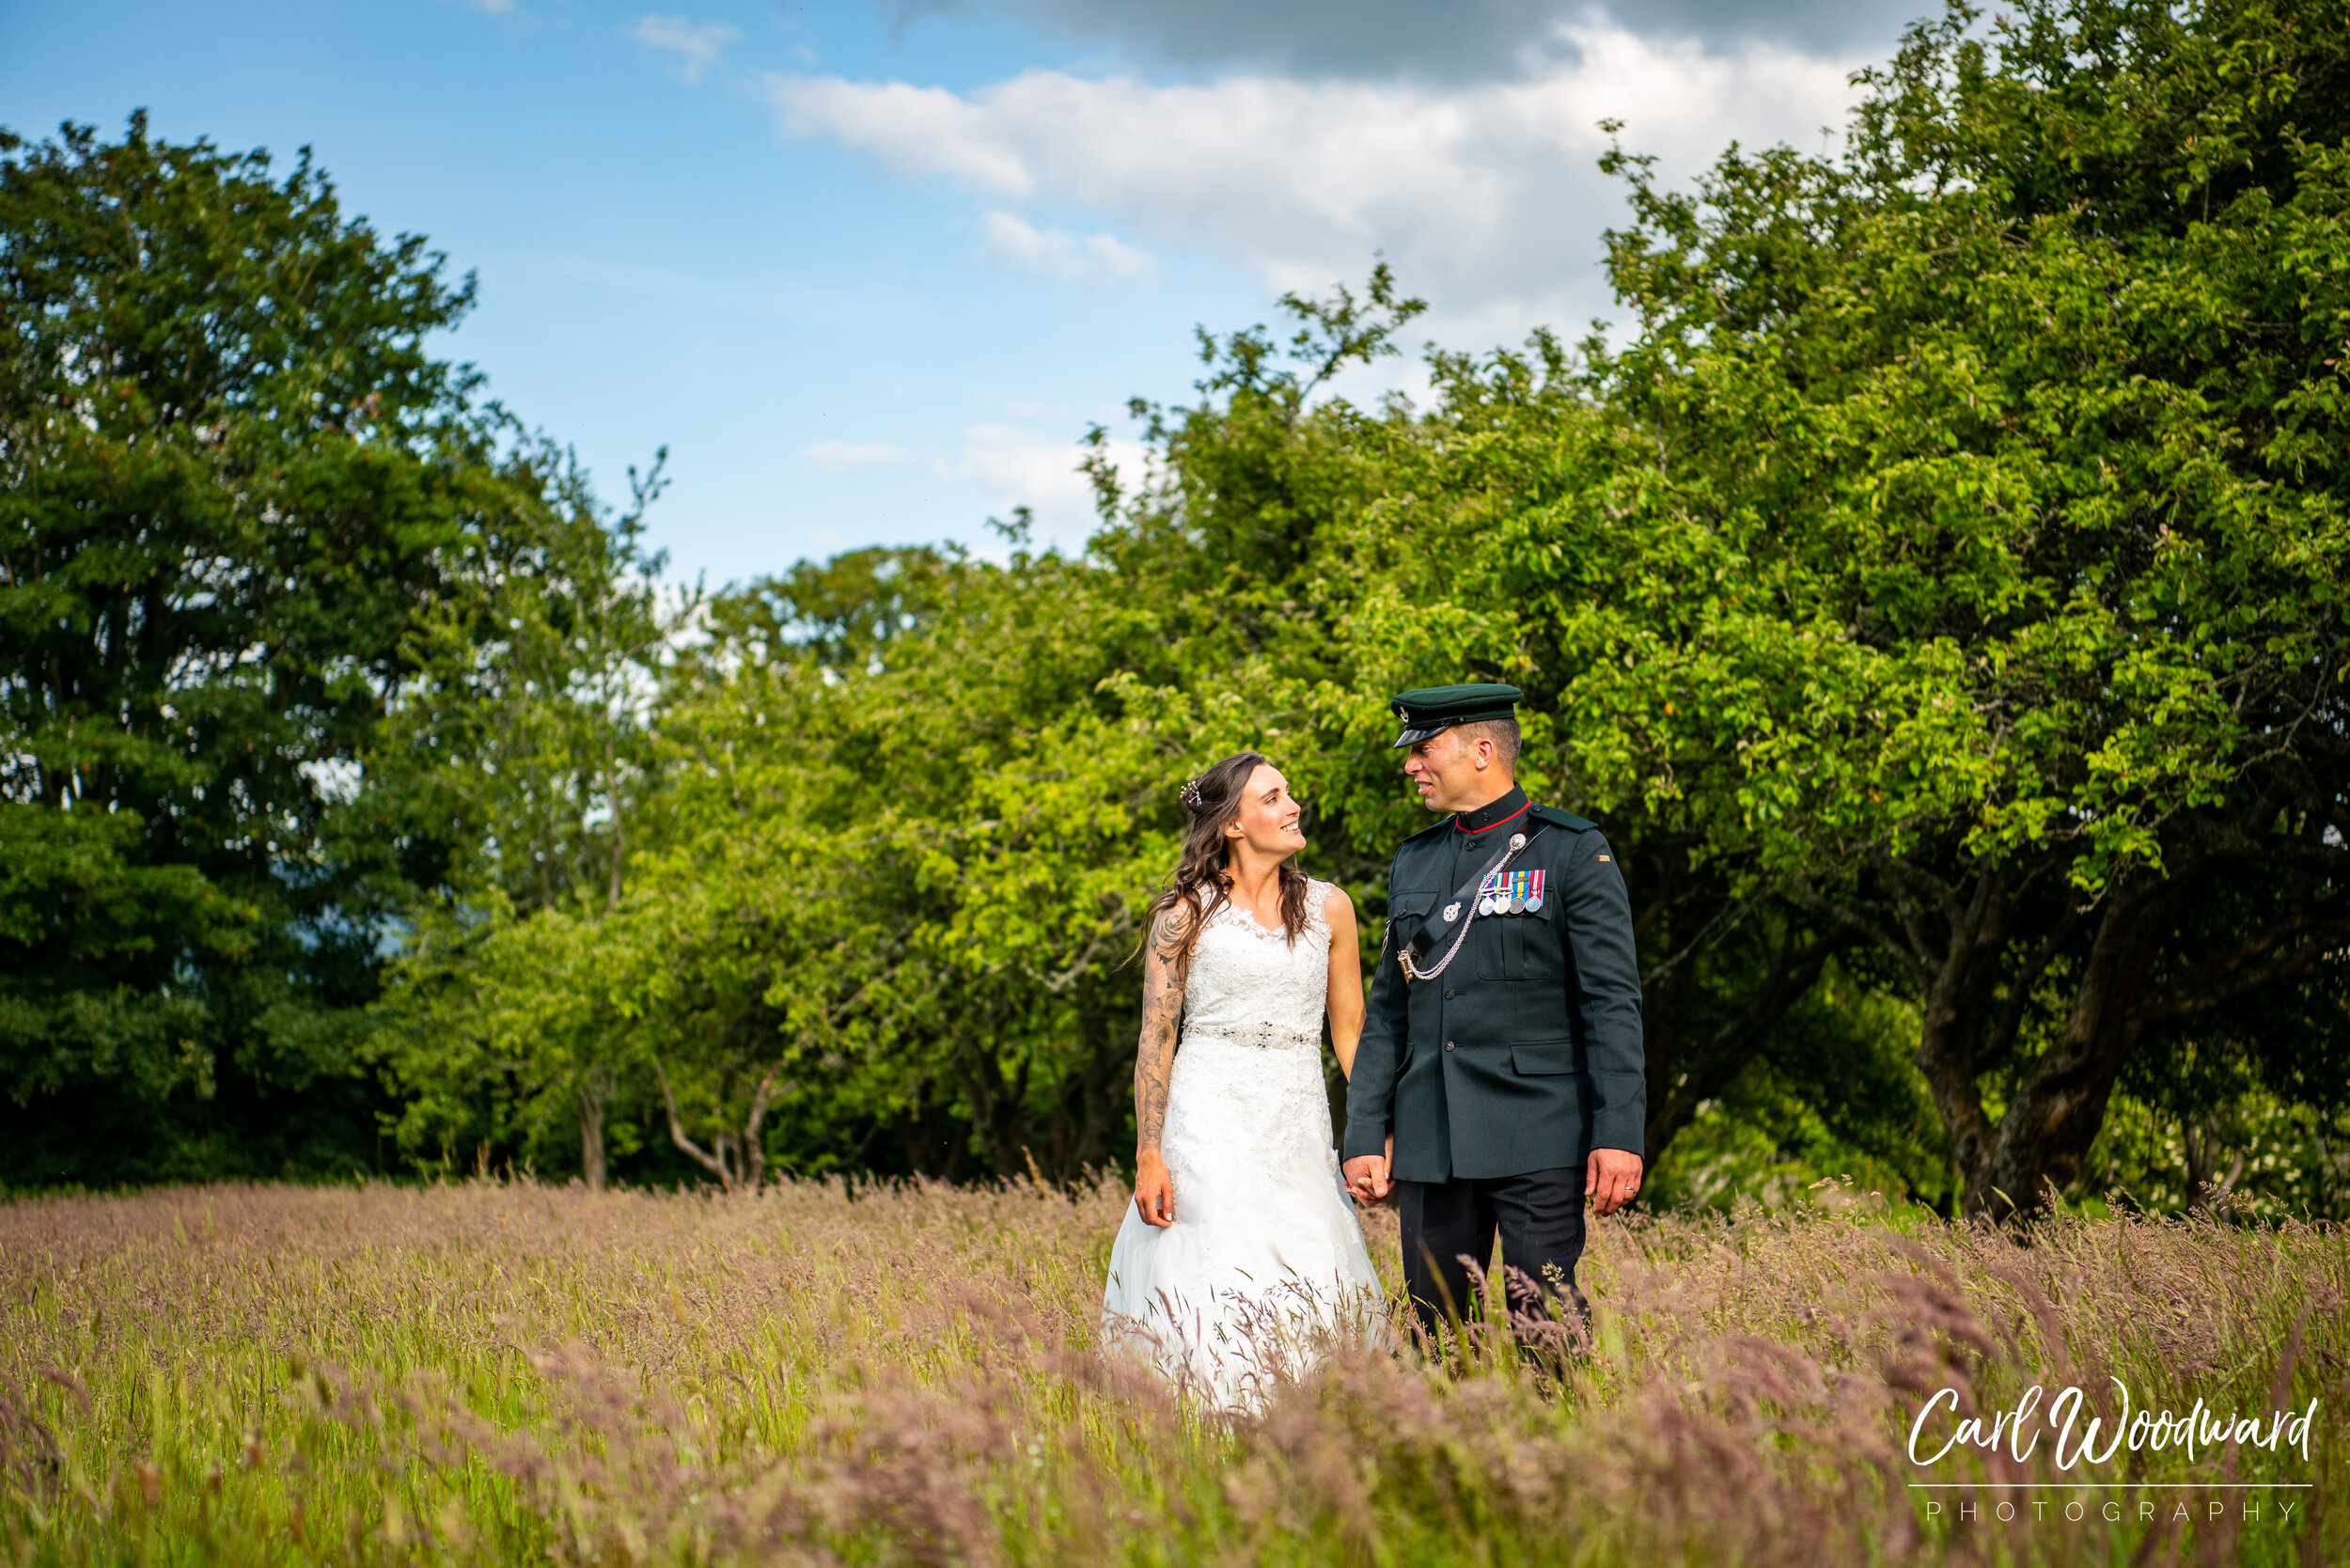 011-Military-Wedding-Photographer-Cardiff-Wedding-Photography.jpg